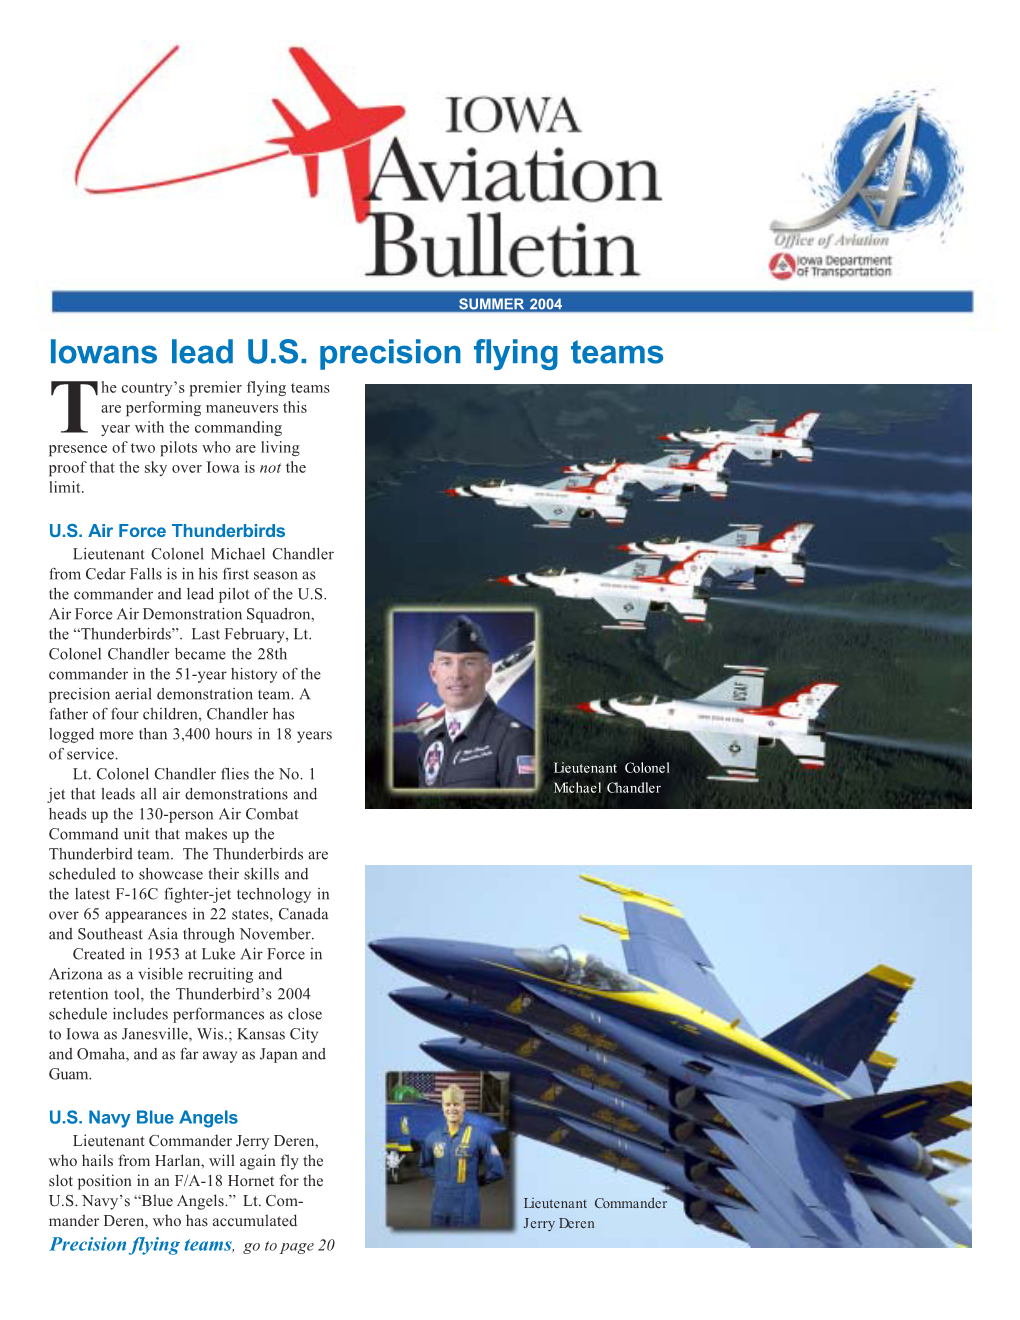 Iowans Lead U.S. Precision Flying Teams